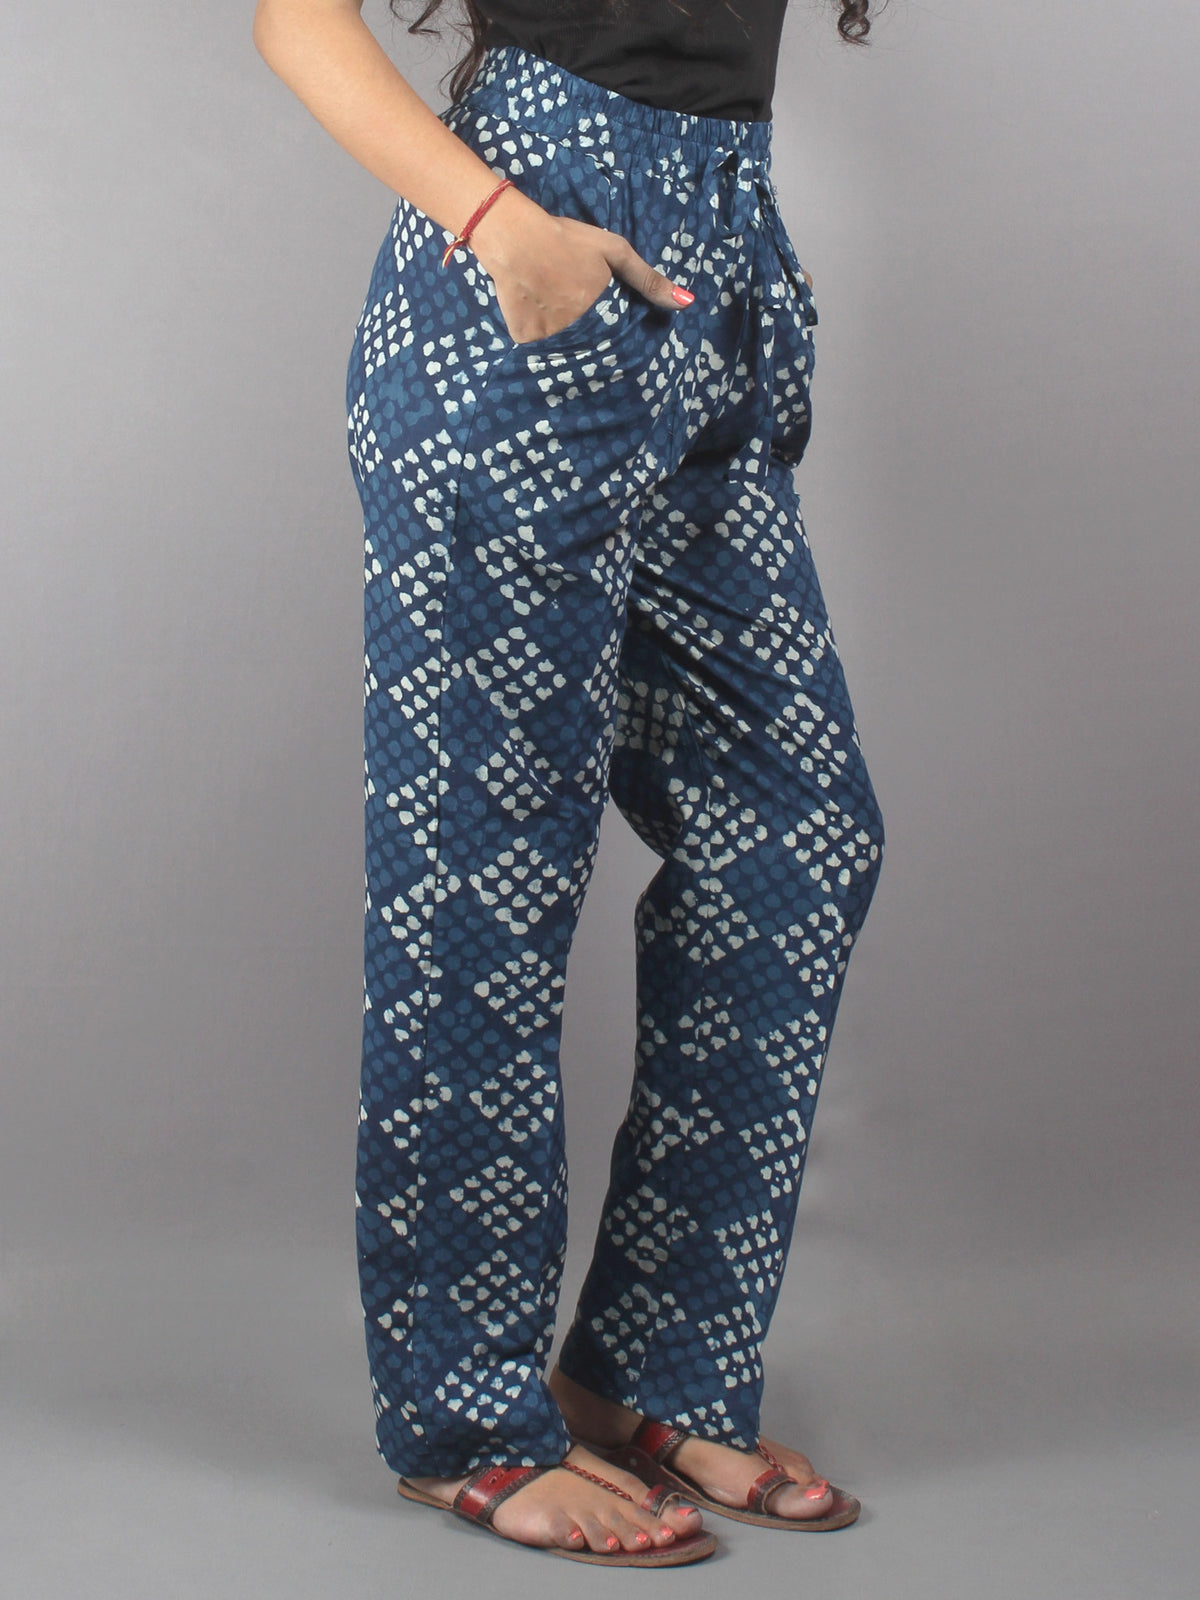 Indigo Hand Block Printed Elasticated Waist Trousers- T0317024